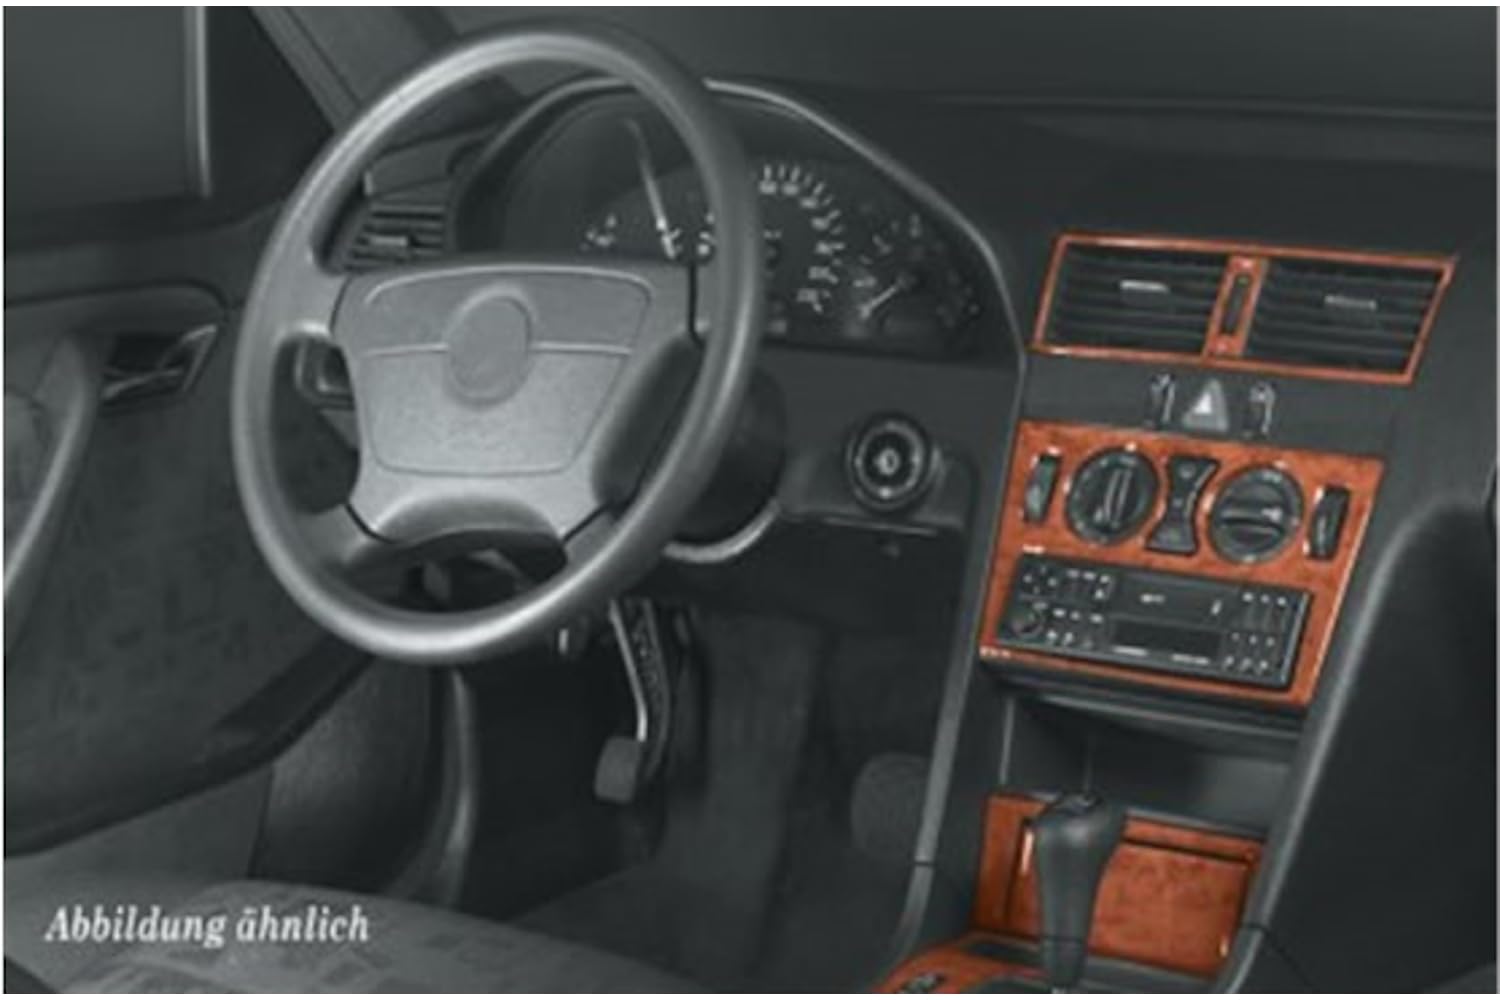 AUTOKLEIDUNG® Cockpit Dekor kompatibel mit Mercedes C Klasse W202 Baujahr 06/1993-09/1995 16 Teile | 3D Wurzelholz Optik von Autokleidung